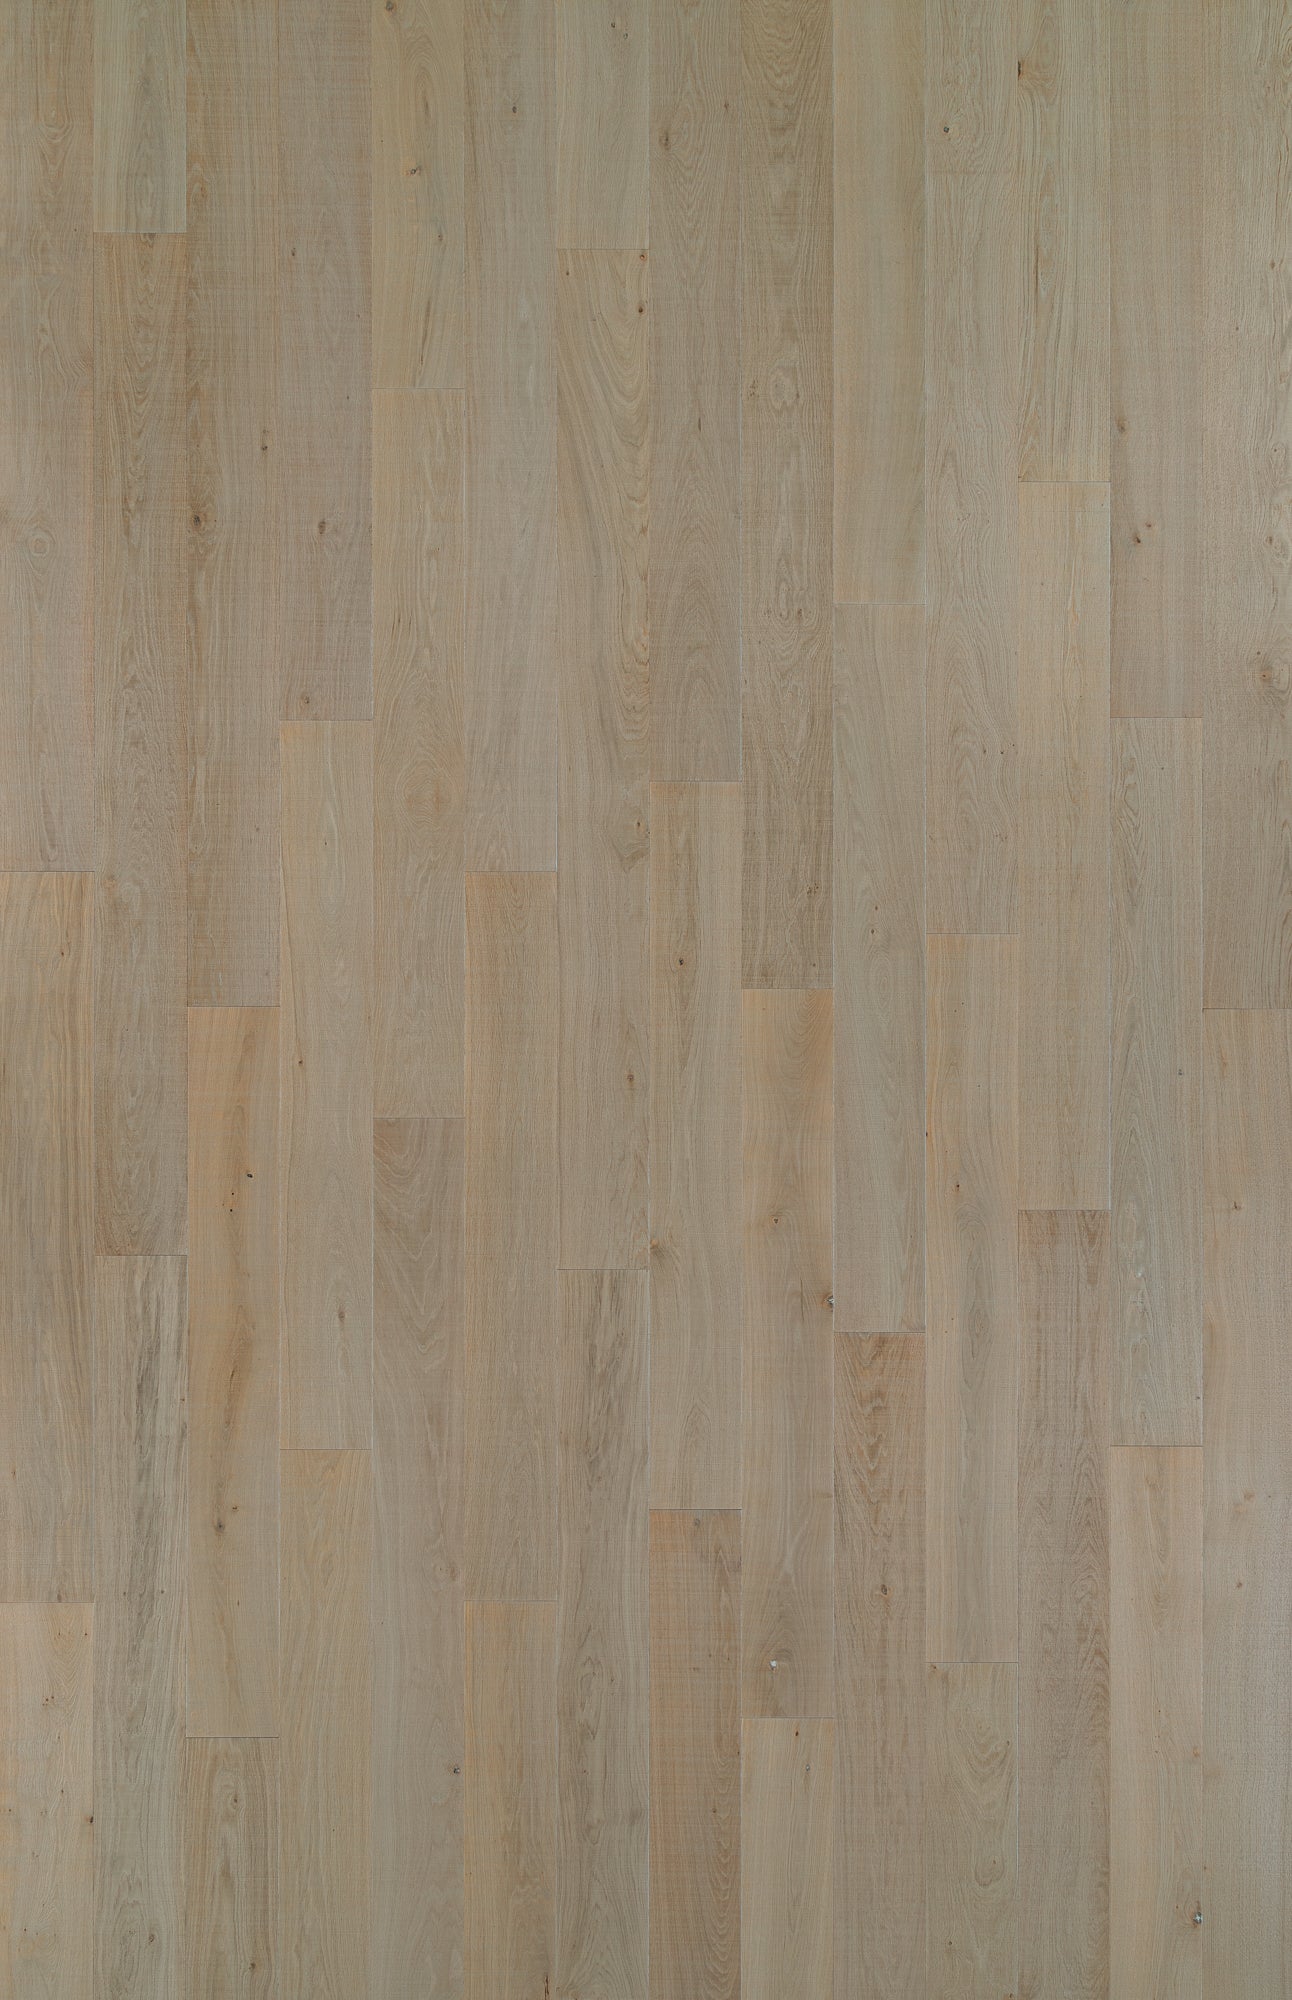 MA15 ROVERE OAK | Hardwood Flooring - $17.78 - $27.80